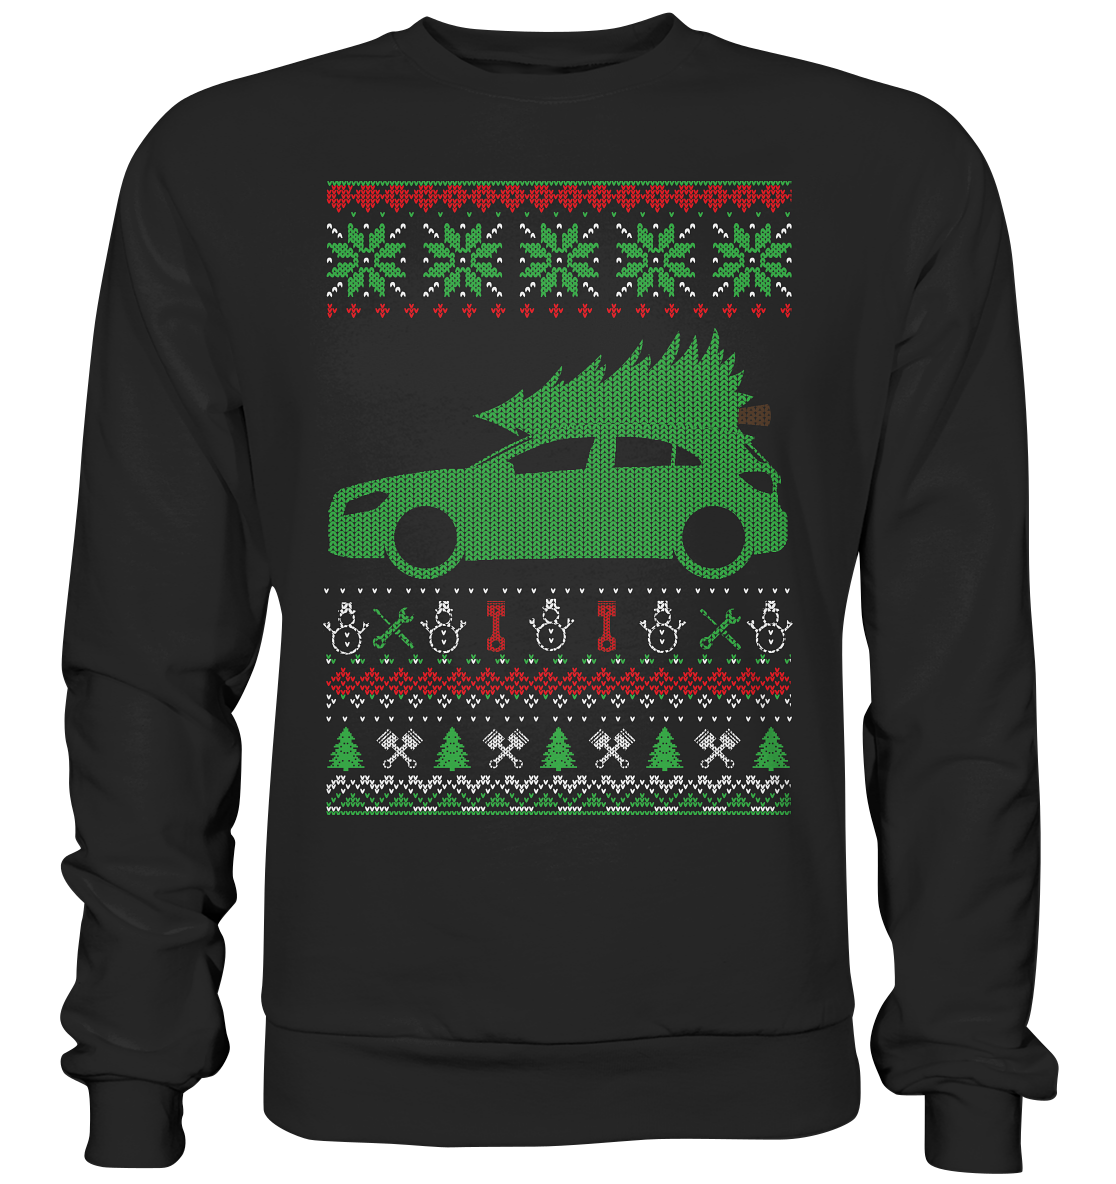 CODUGLY_MGKW176 - Premium Sweatshirt